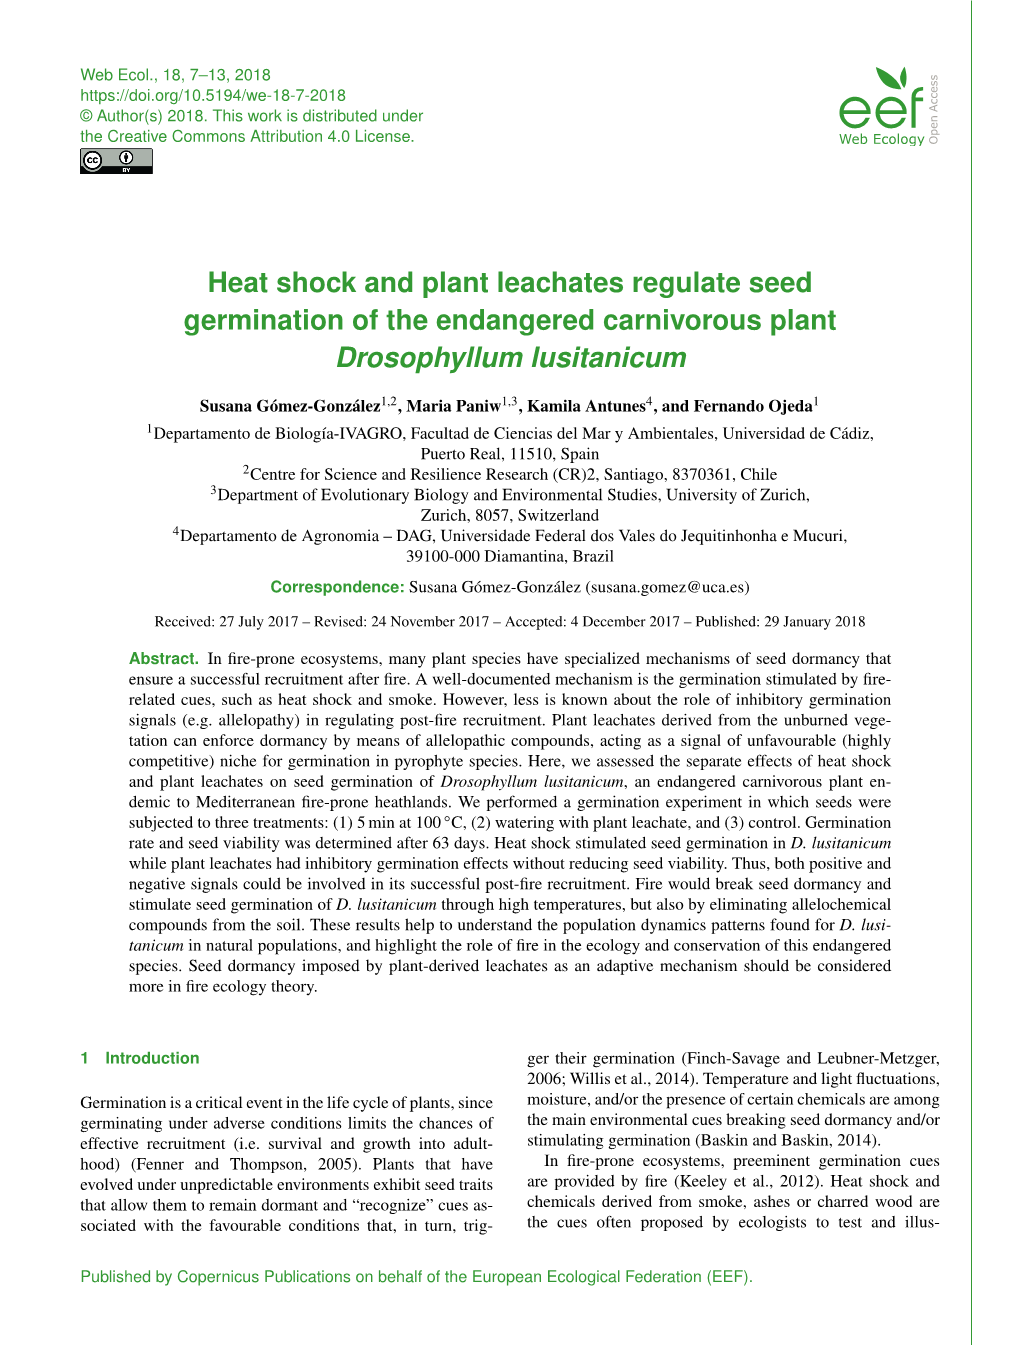 Heat Shock and Plant Leachates Regulate Seed Germination of the Endangered Carnivorous Plant Drosophyllum Lusitanicum